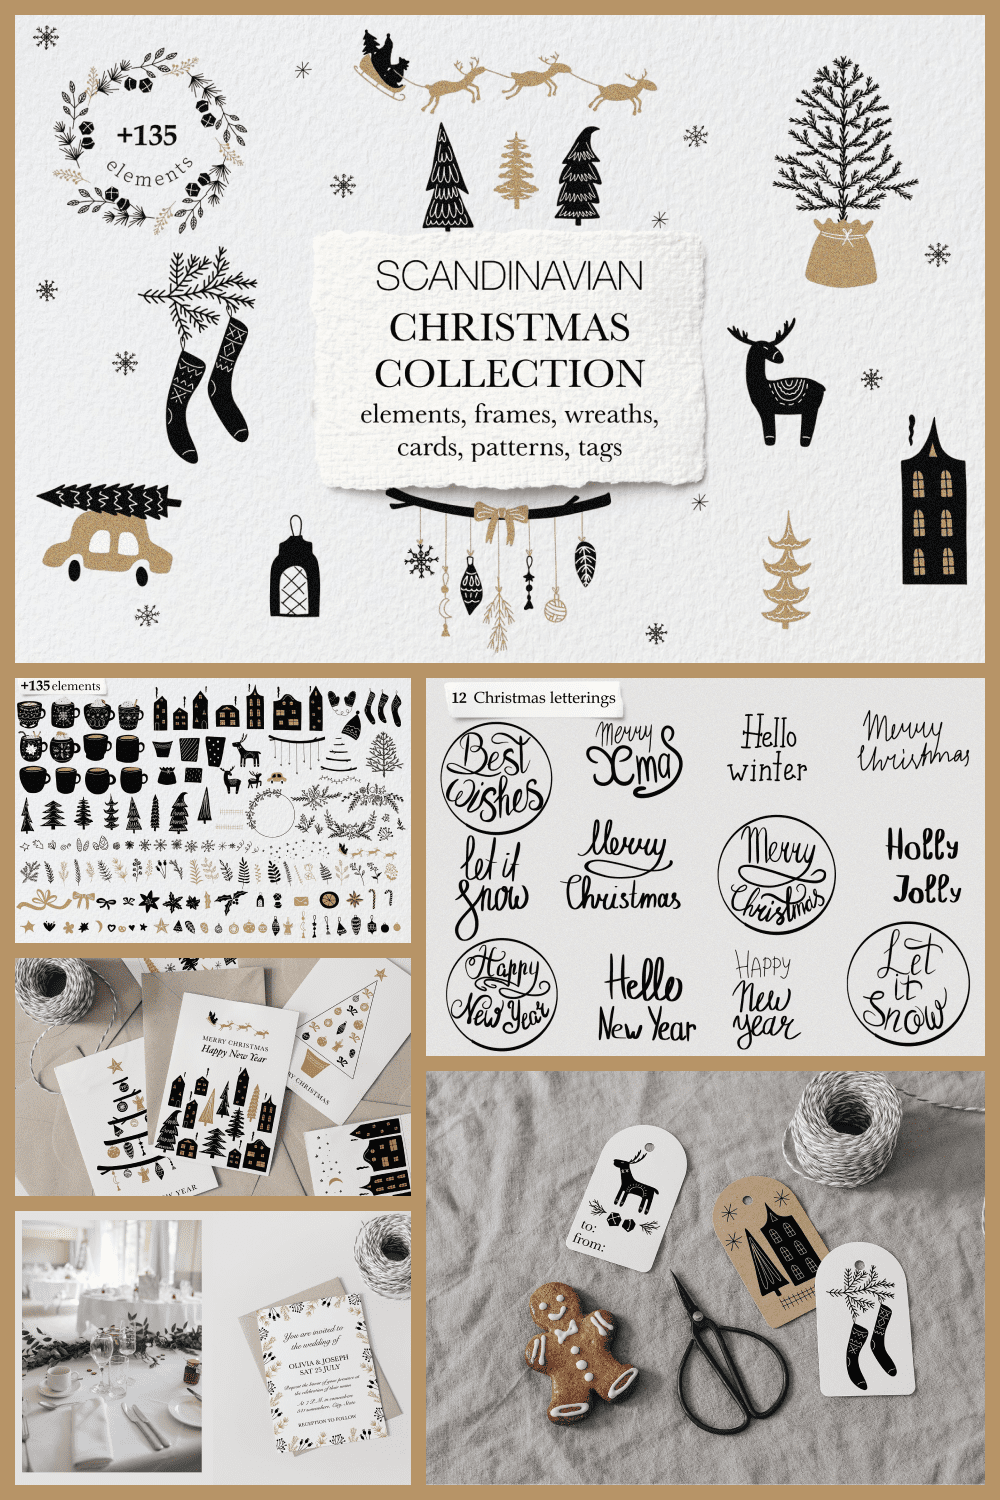 Minimalistic Christmas hand-drawn brown and black illustrations.